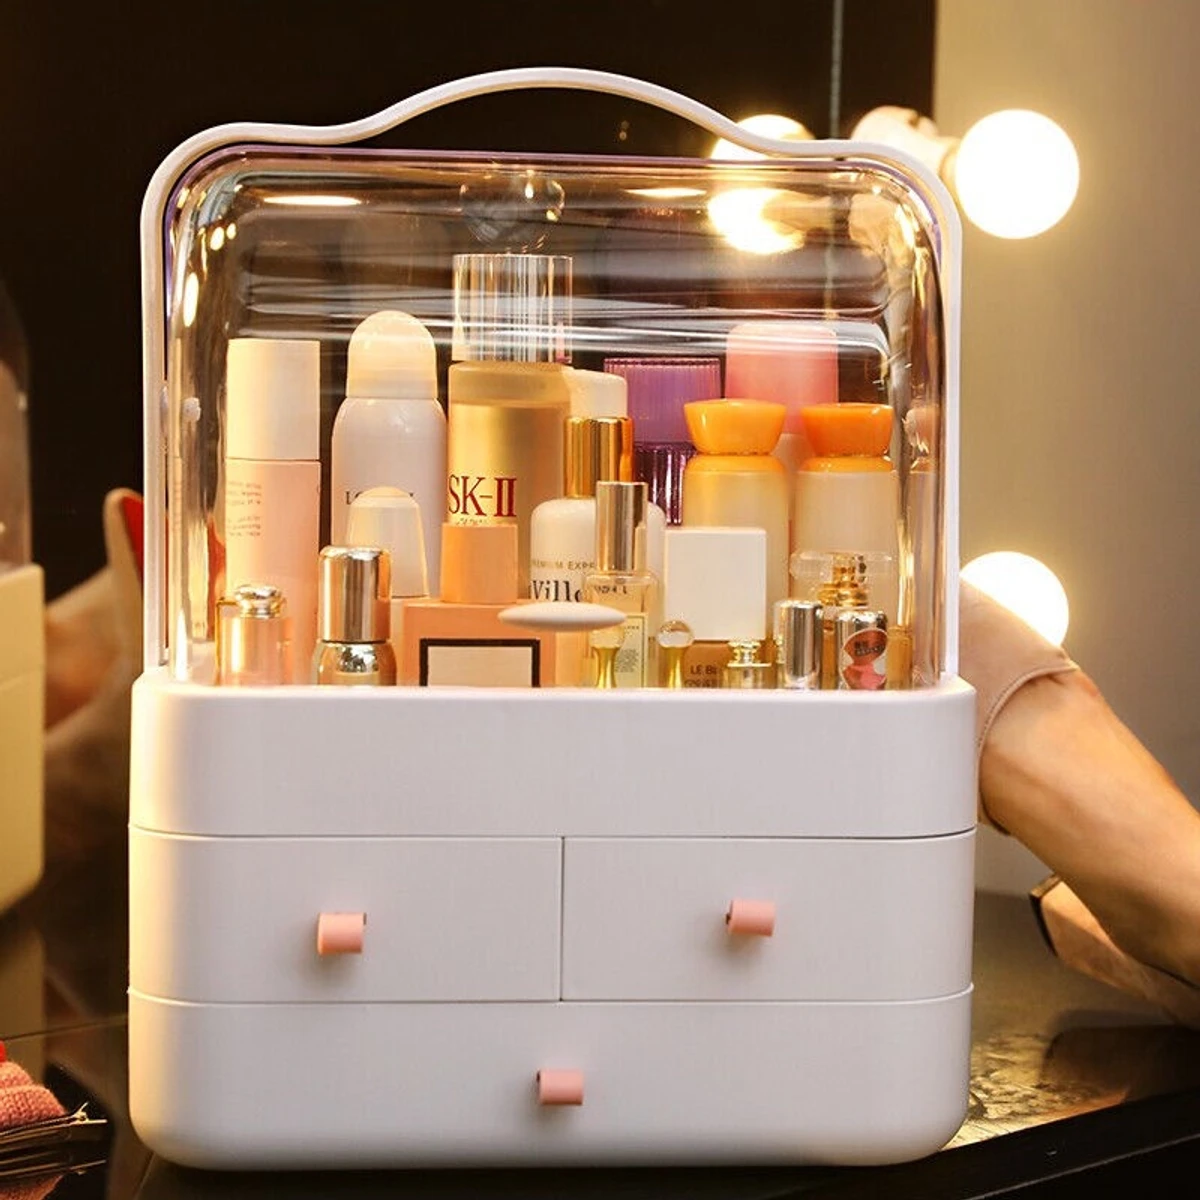 Cosmetic Storage Box Dust Proof Desktop Makeup Case - Make Up Organizer